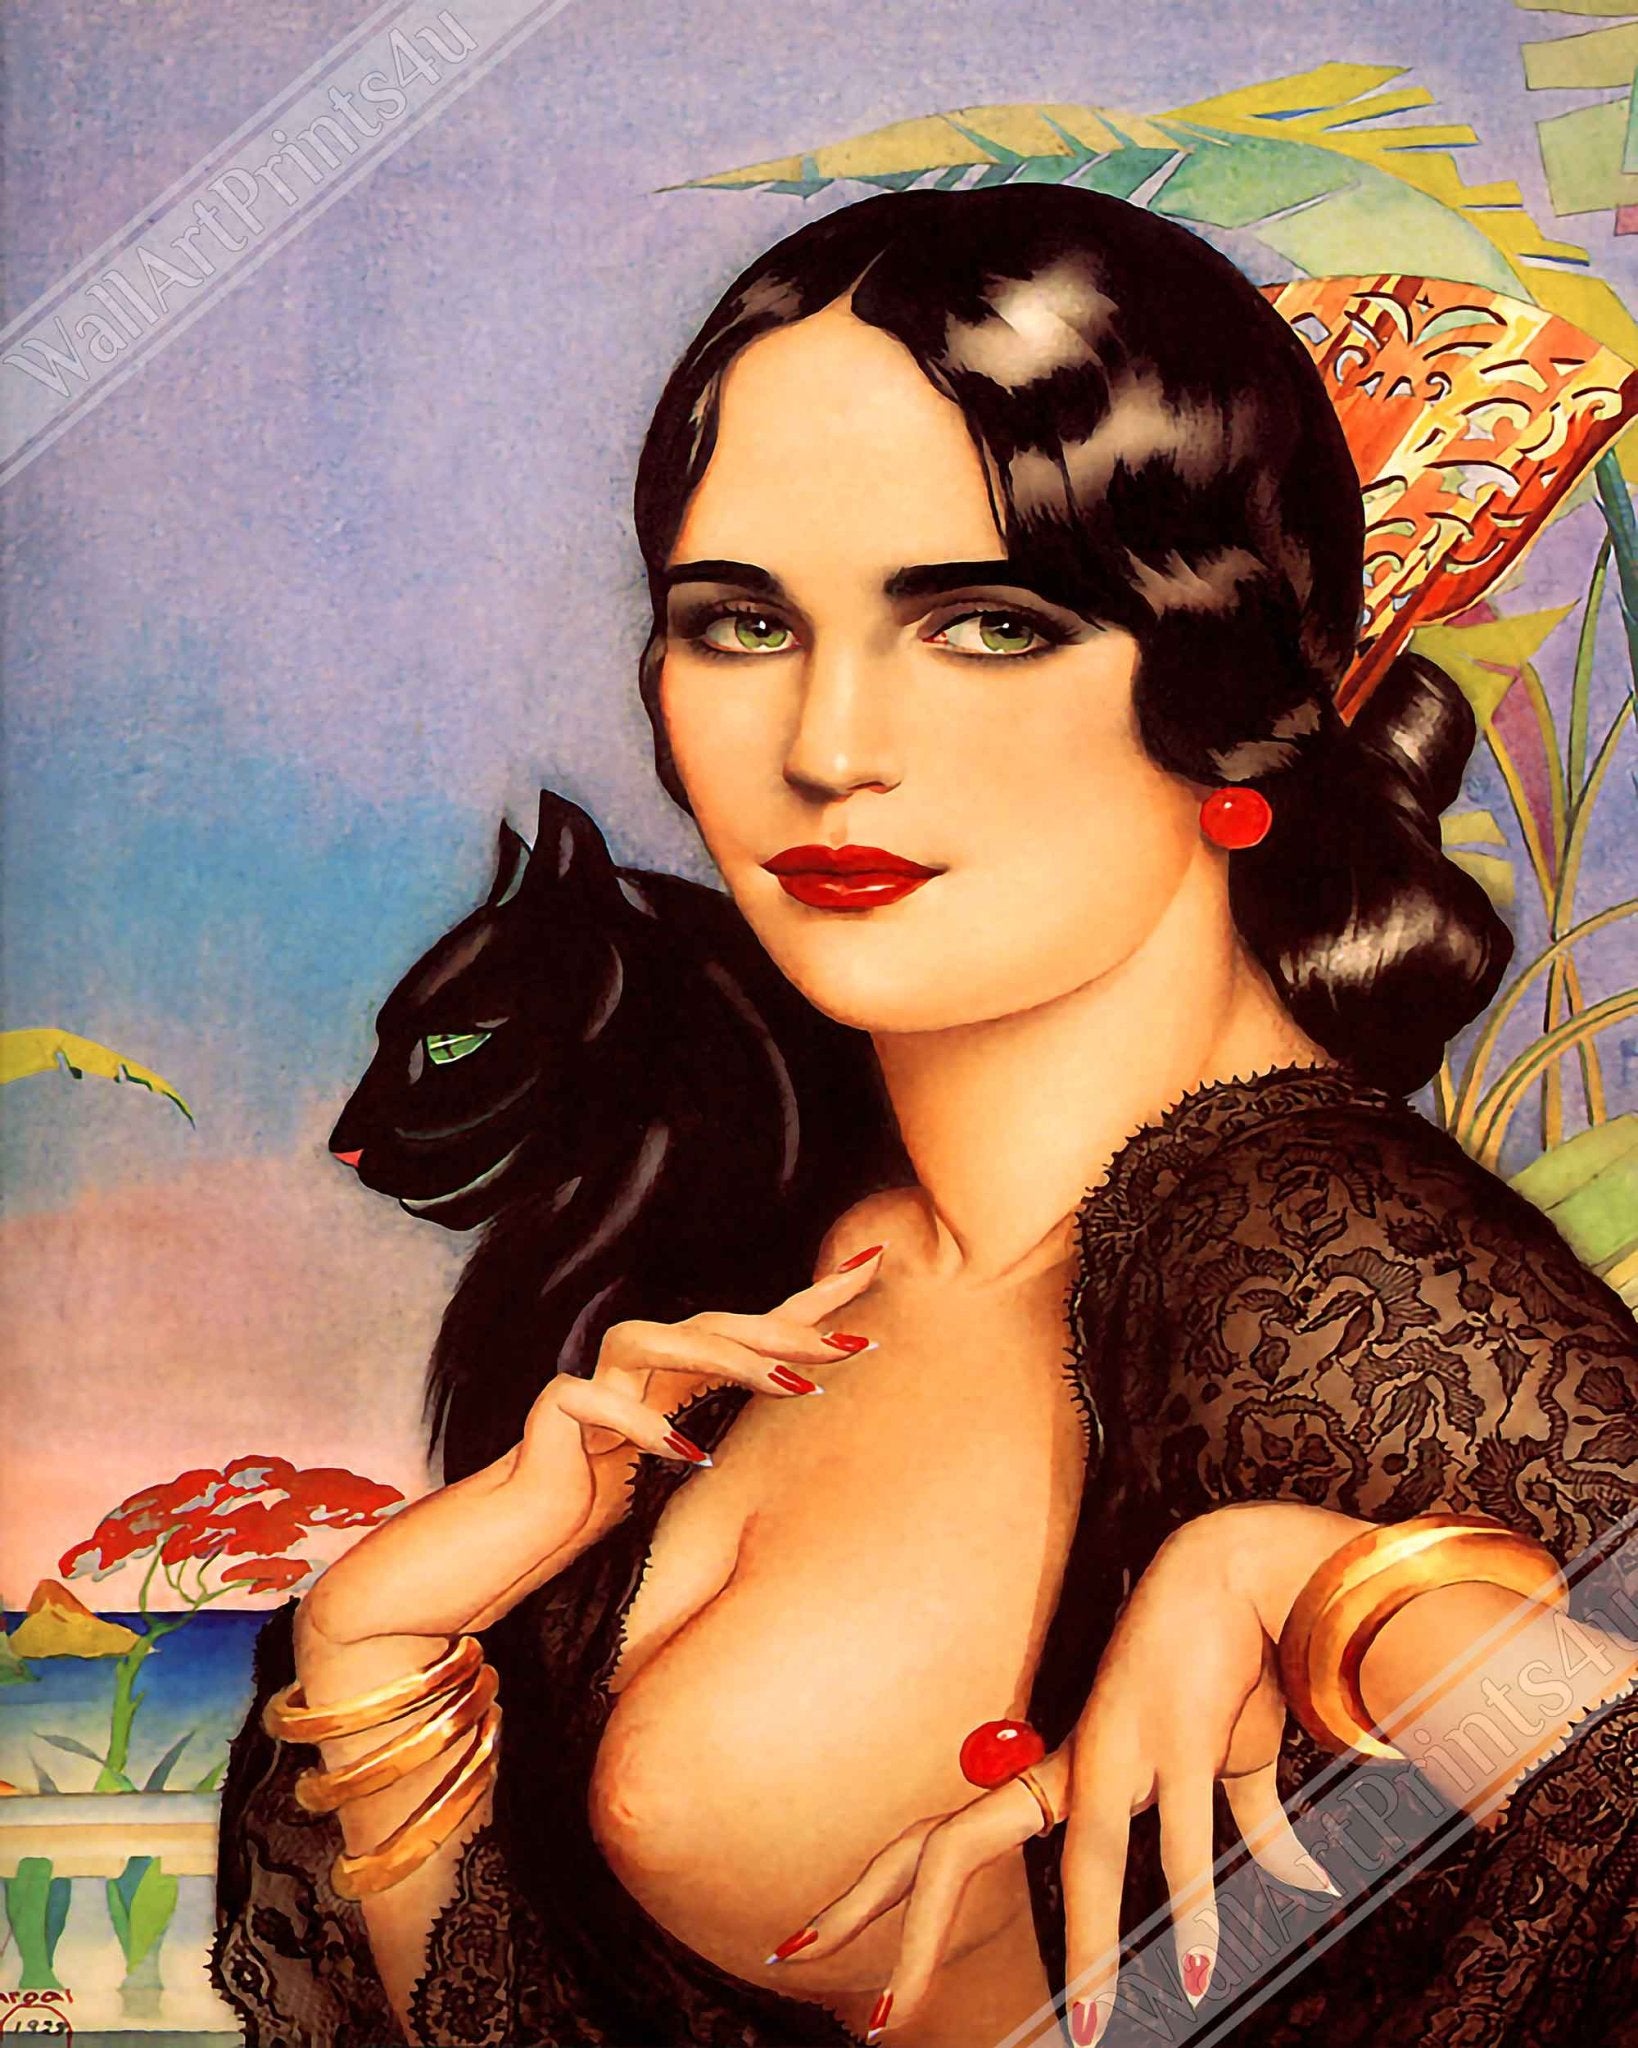 Vintage Pin Up Girl Canvas, Alberto Vargas, Spanish Gypsy Black Cat - Vintage Art - Retro Pin Up Girl Canvas Print - 1928 - WallArtPrints4U